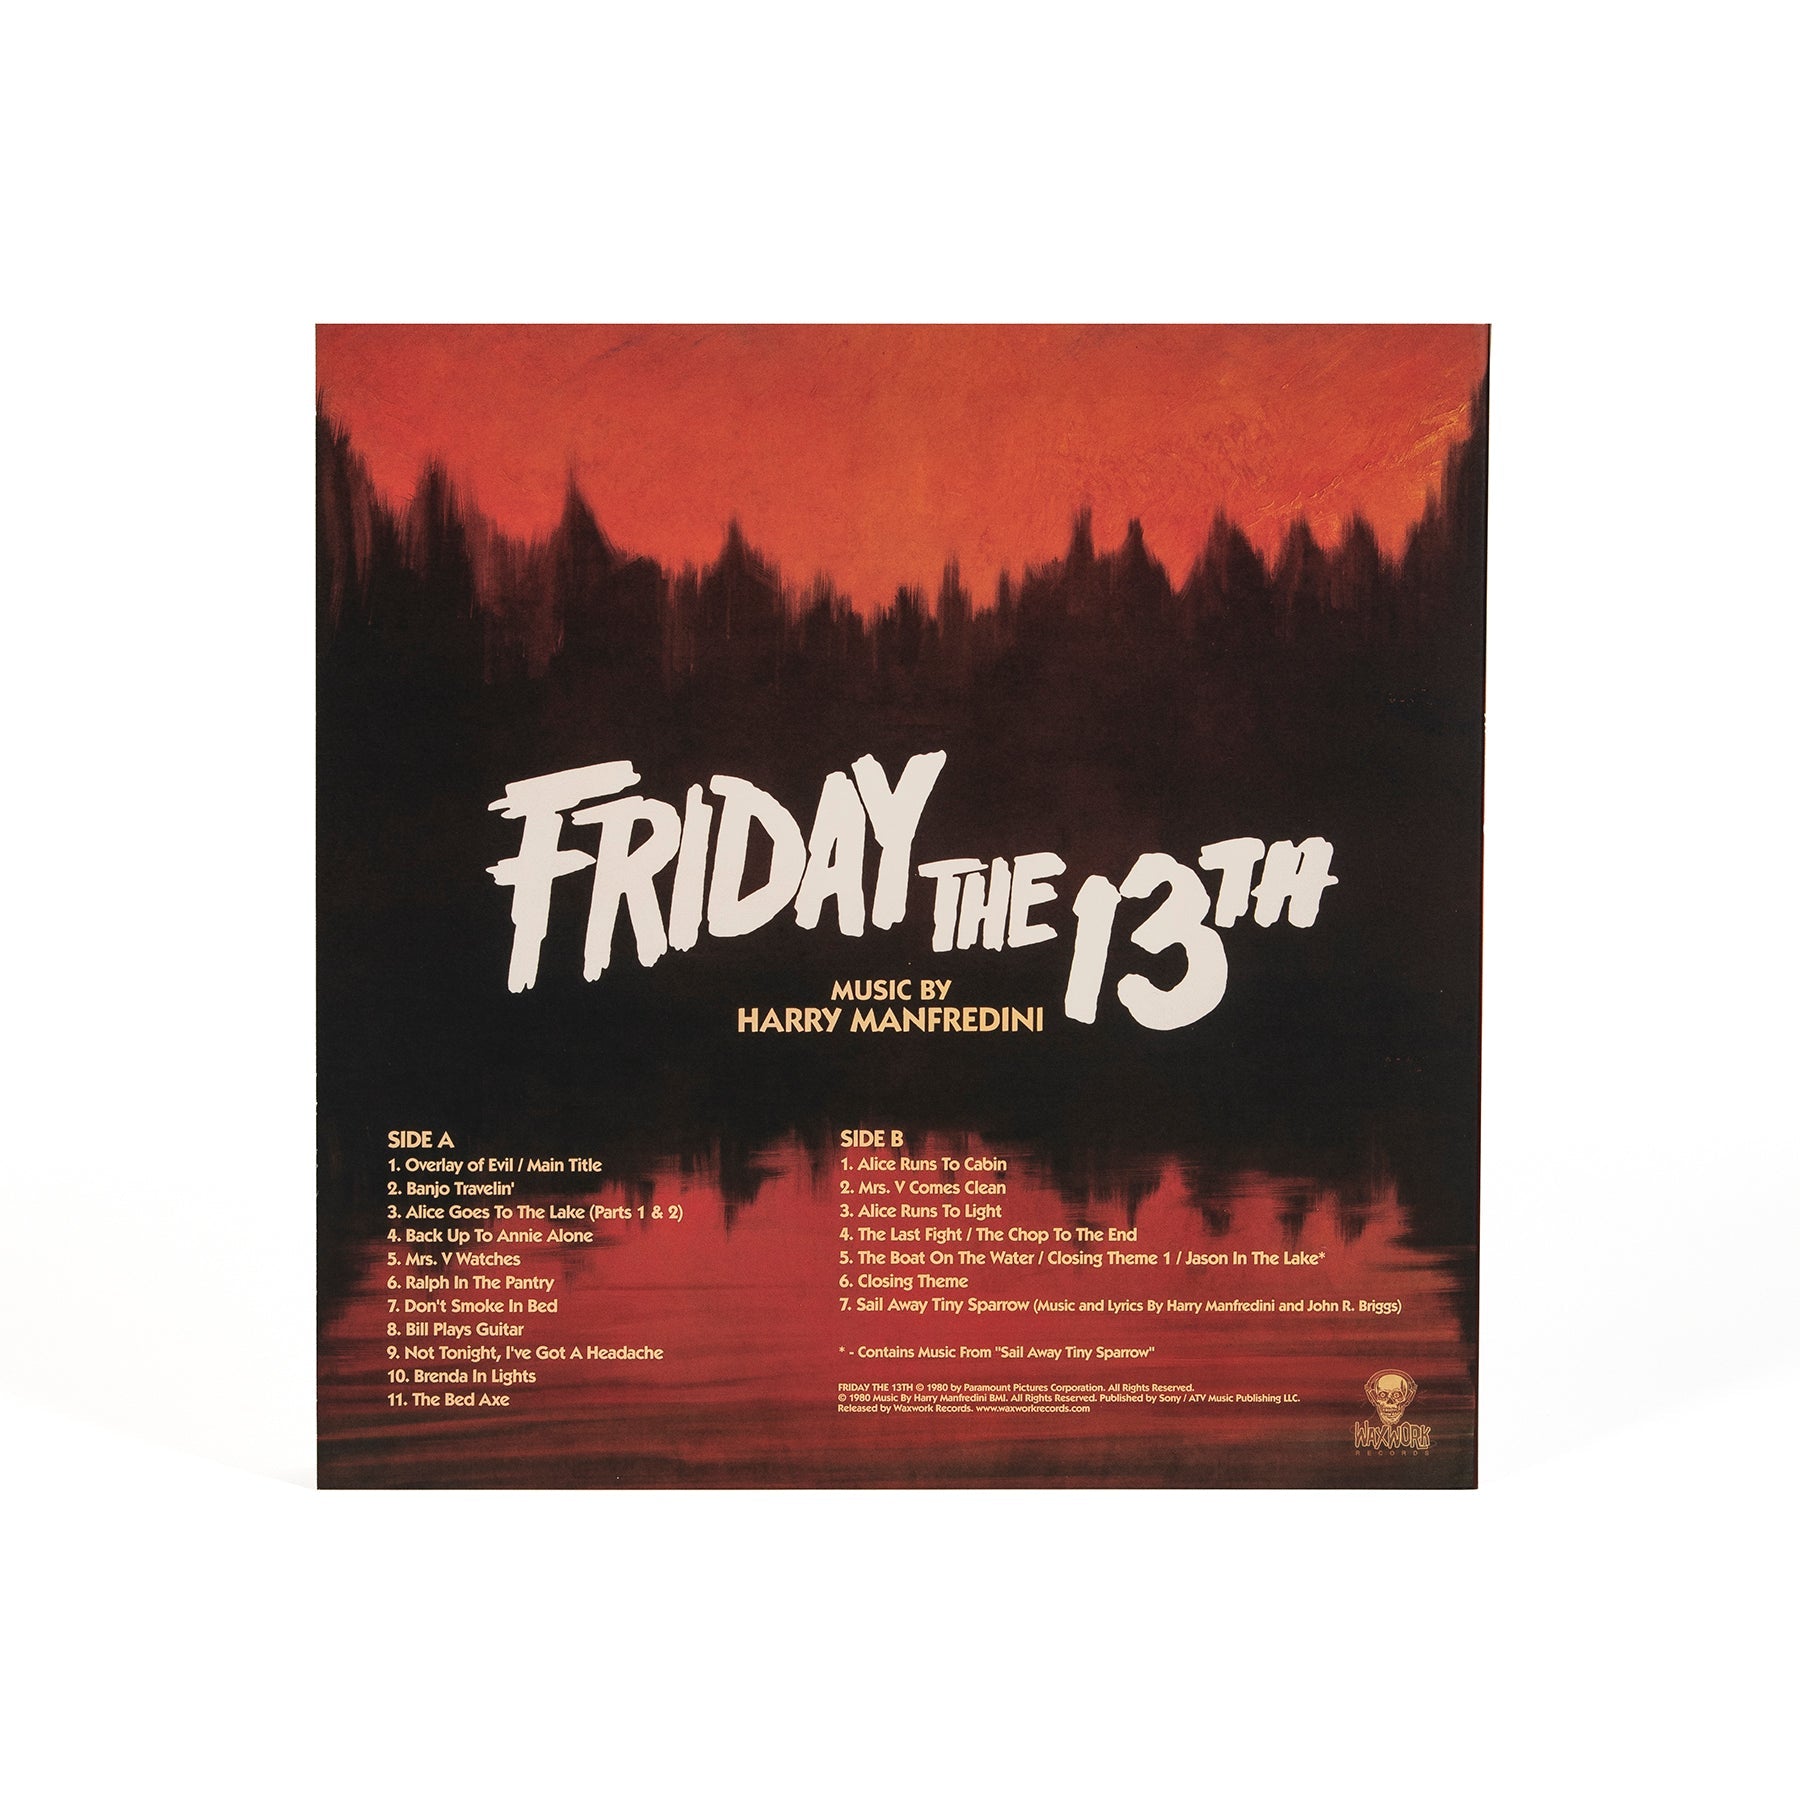 WW013 - Harry Manfredini - Friday the 13th (Original Soundtrack)